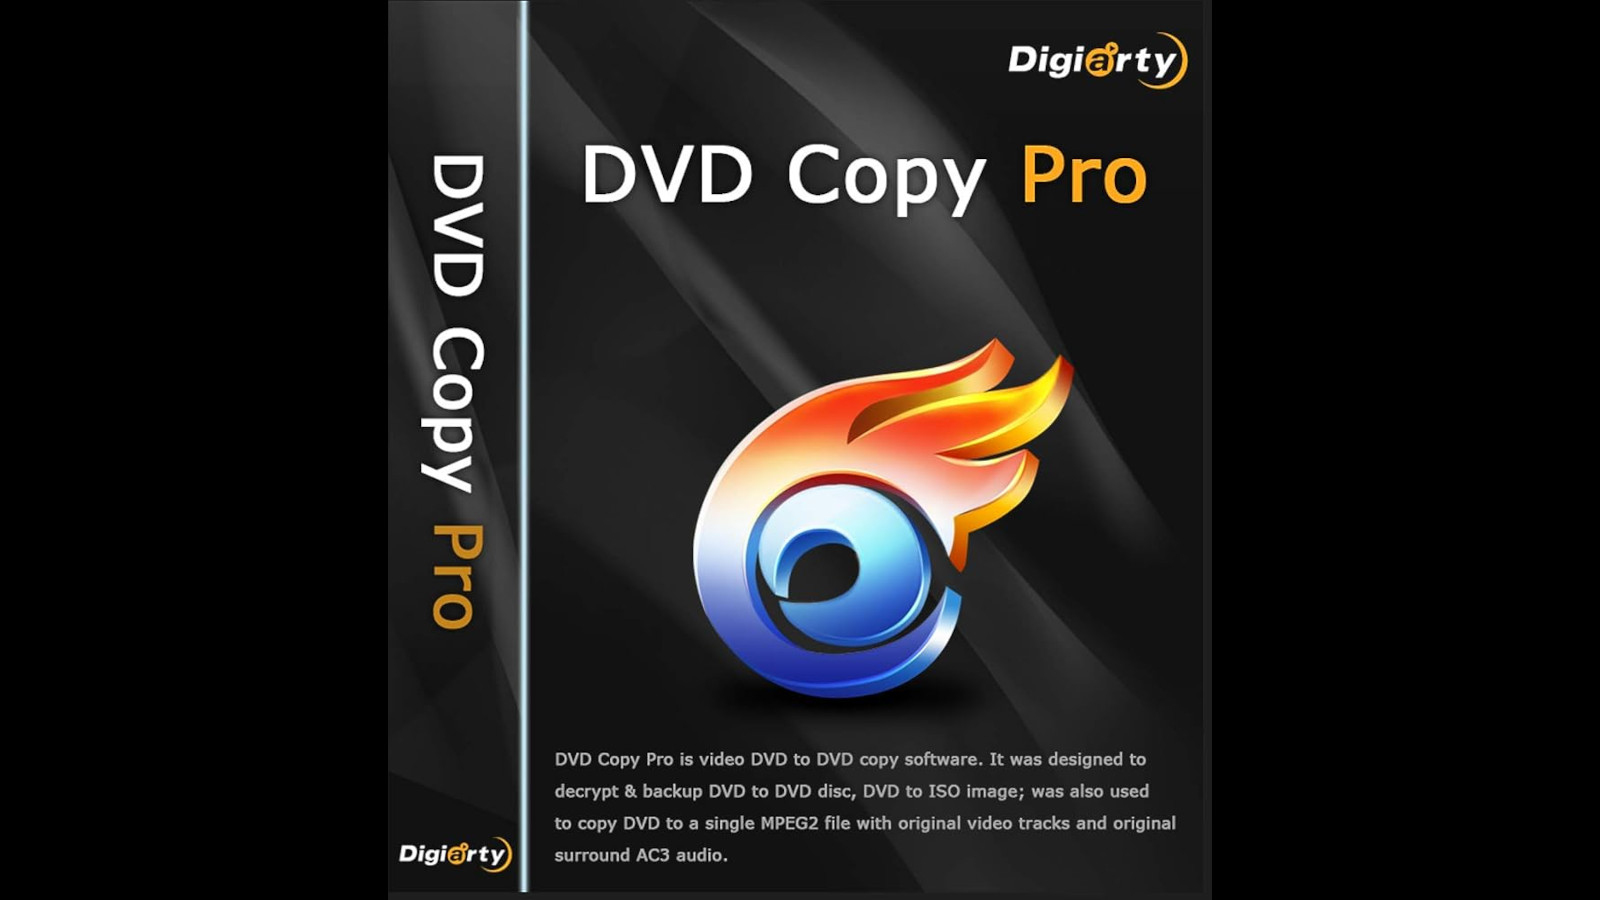 WinX DVD Copy Pro For Windows Key 7.85 usd